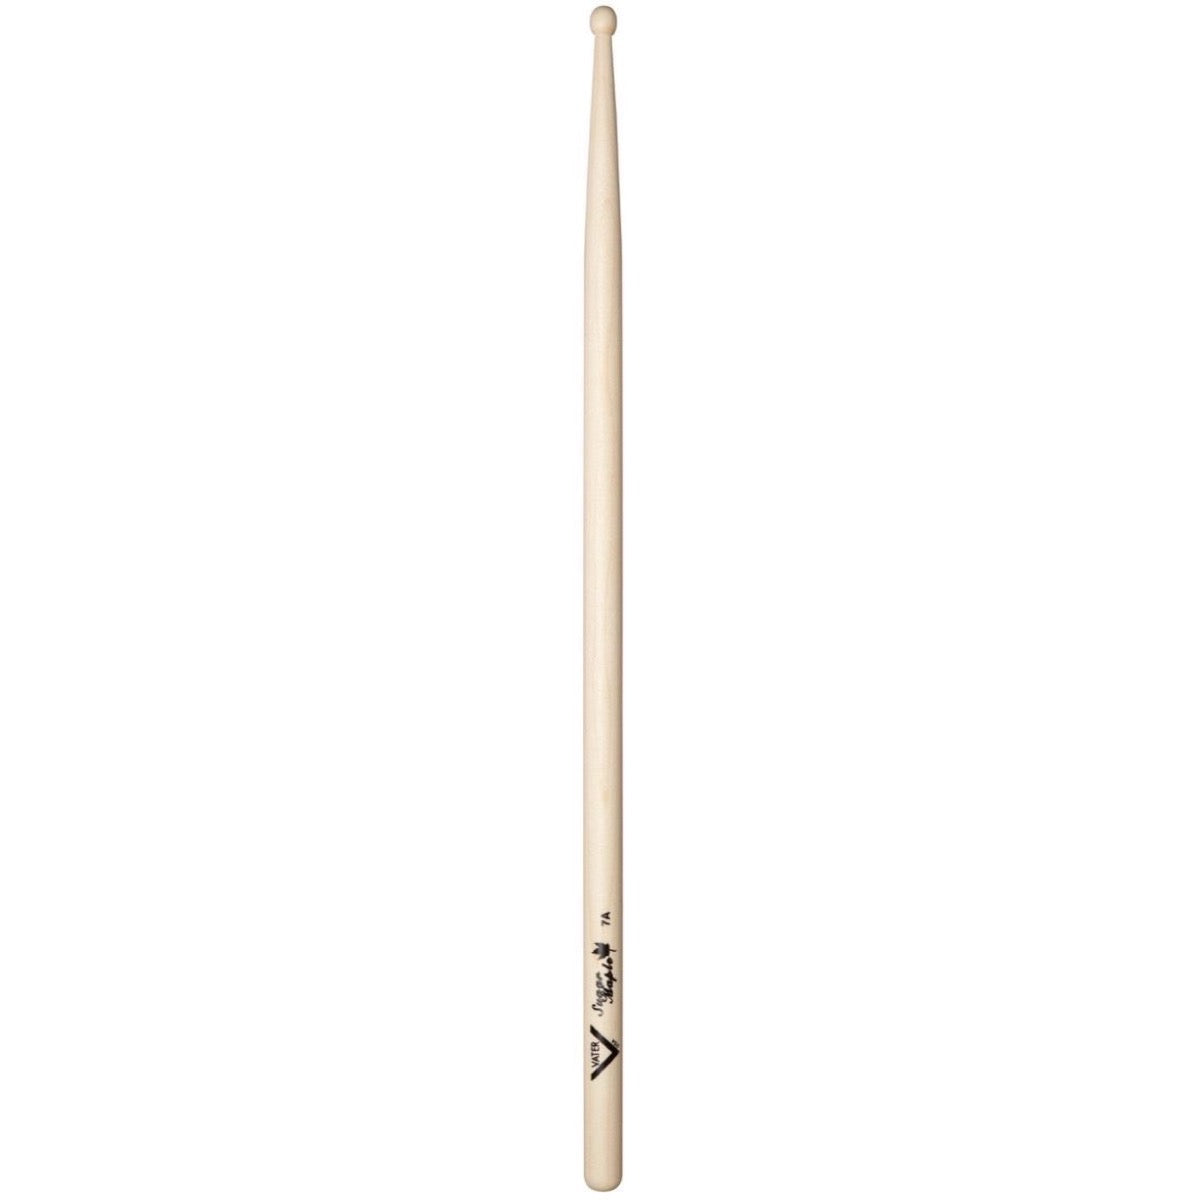 Vater Sugar Maple Drumsticks (Pair), Wood Tip, 7A